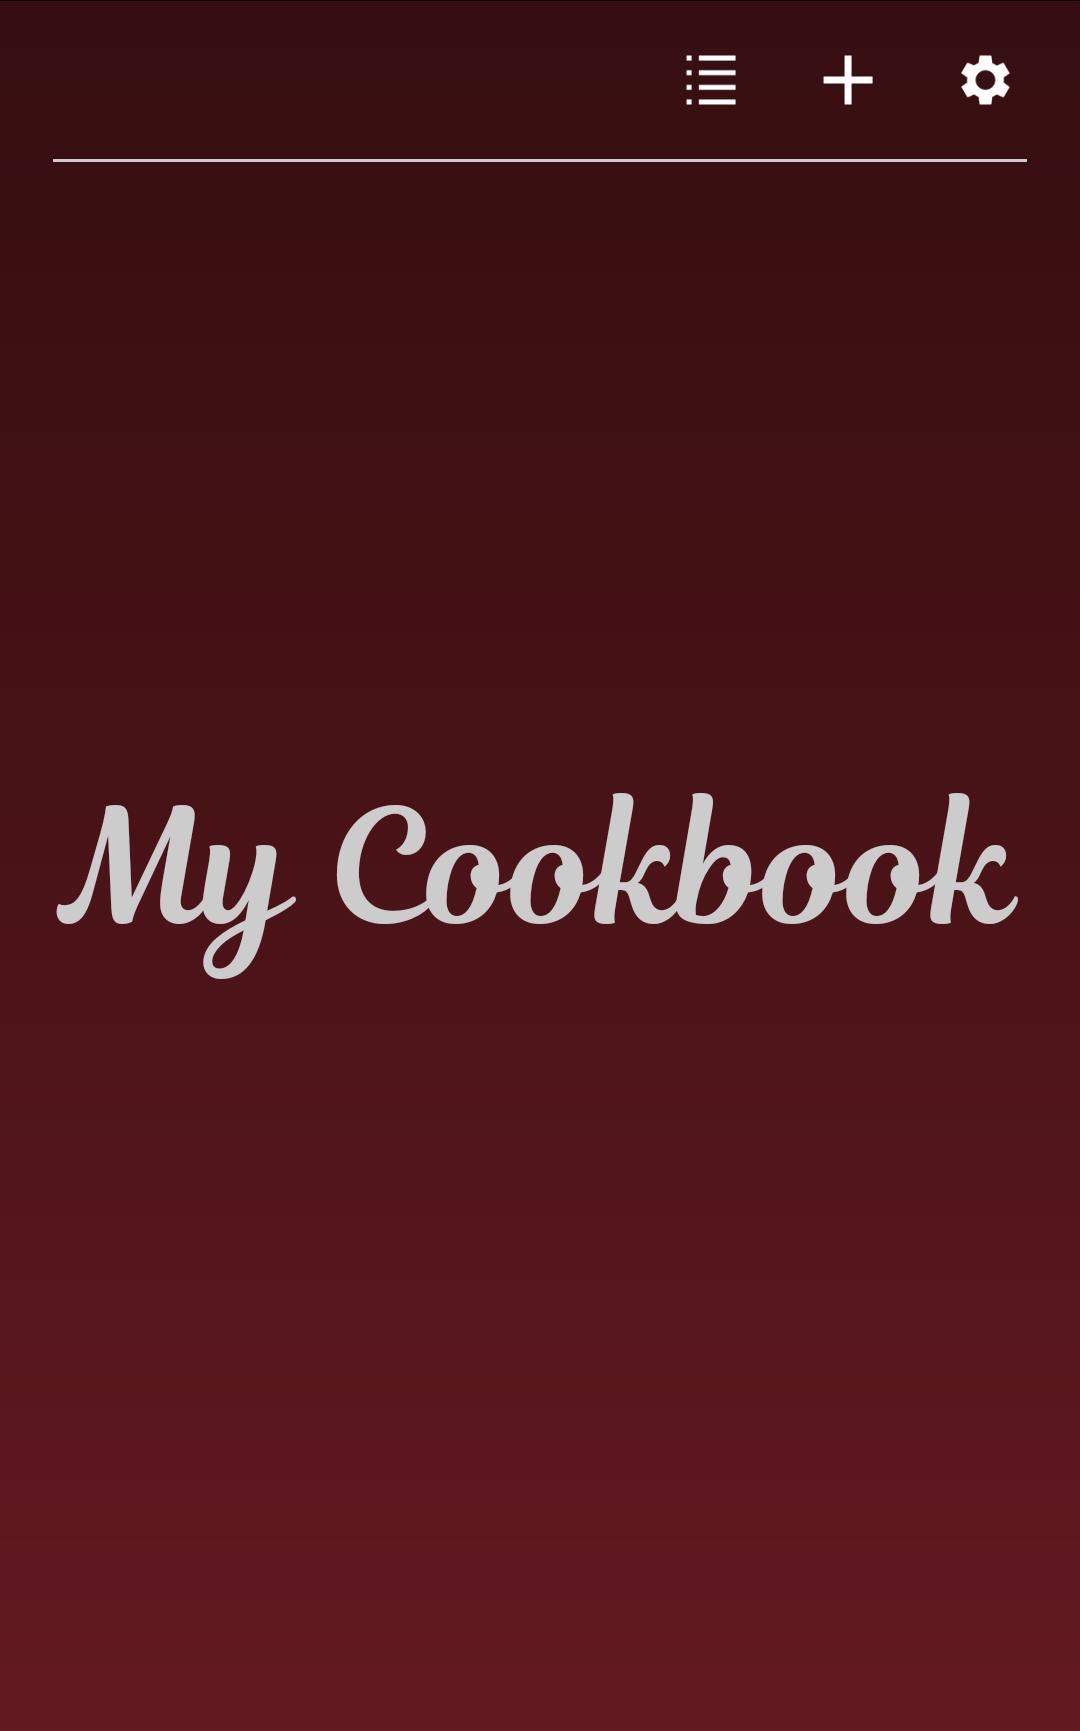 My cooking book. My Cookbook.